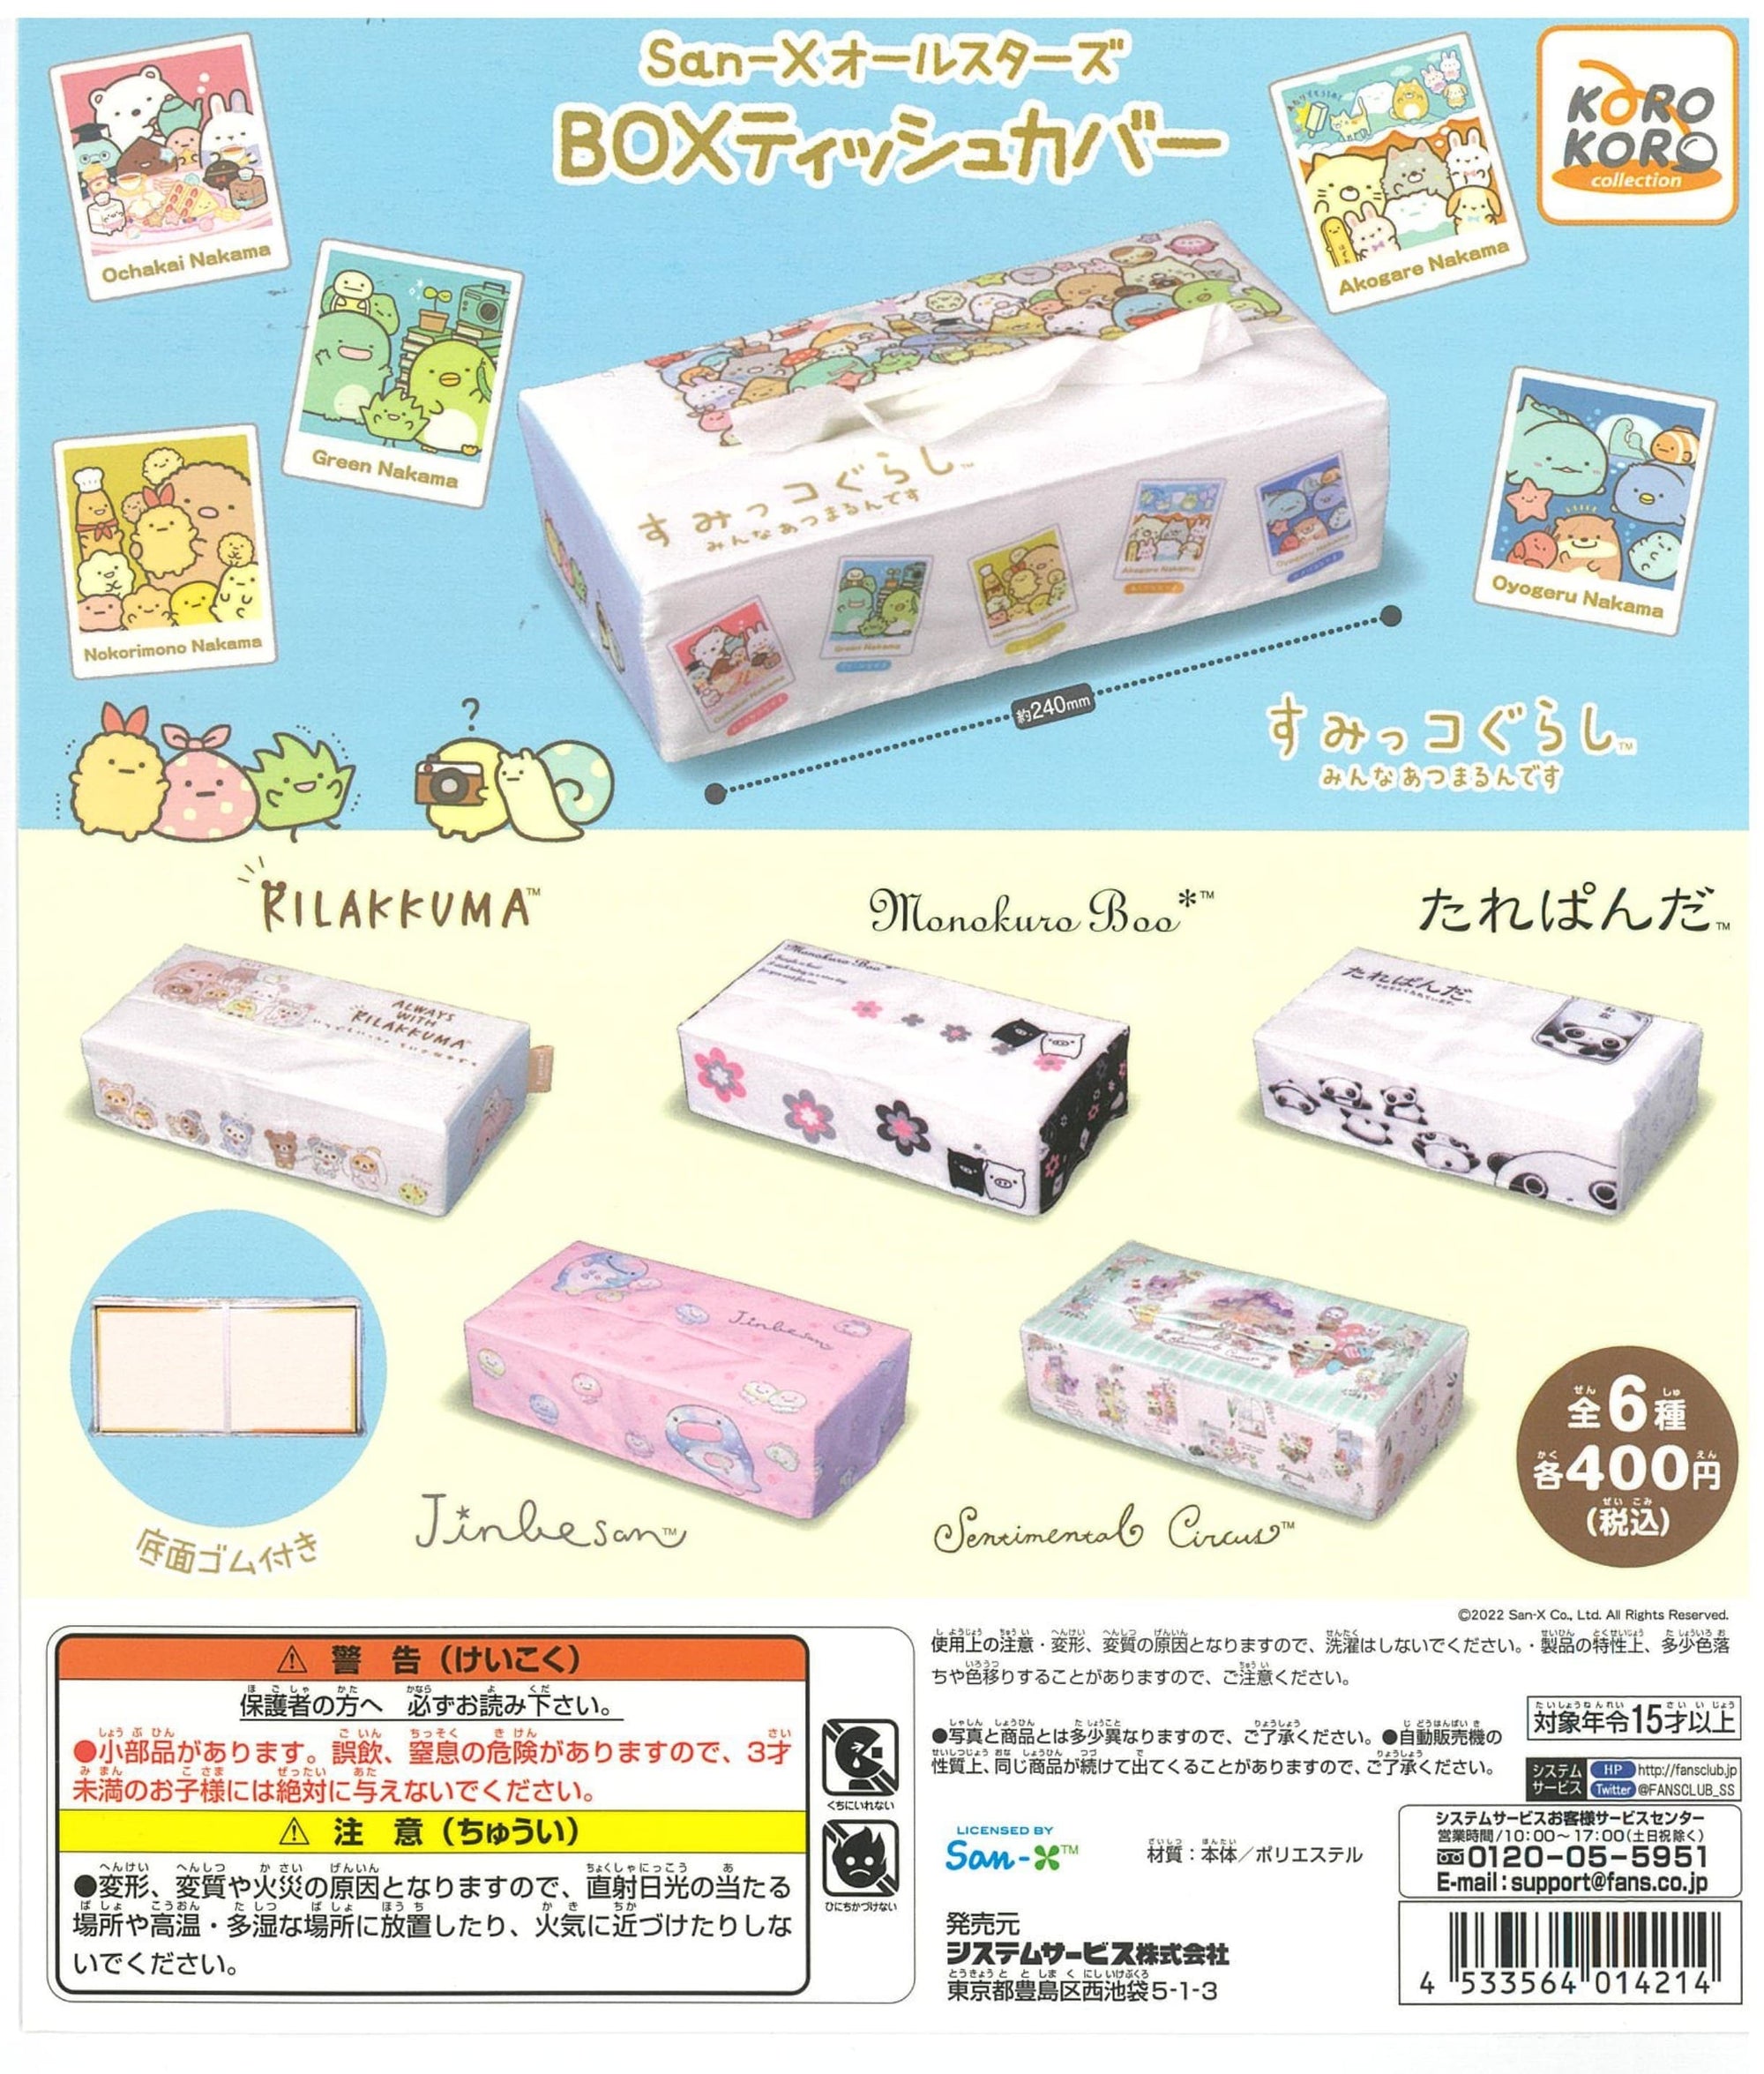 KoroKoro Collection CP2136 San-X All Stars Box Tissue Cover